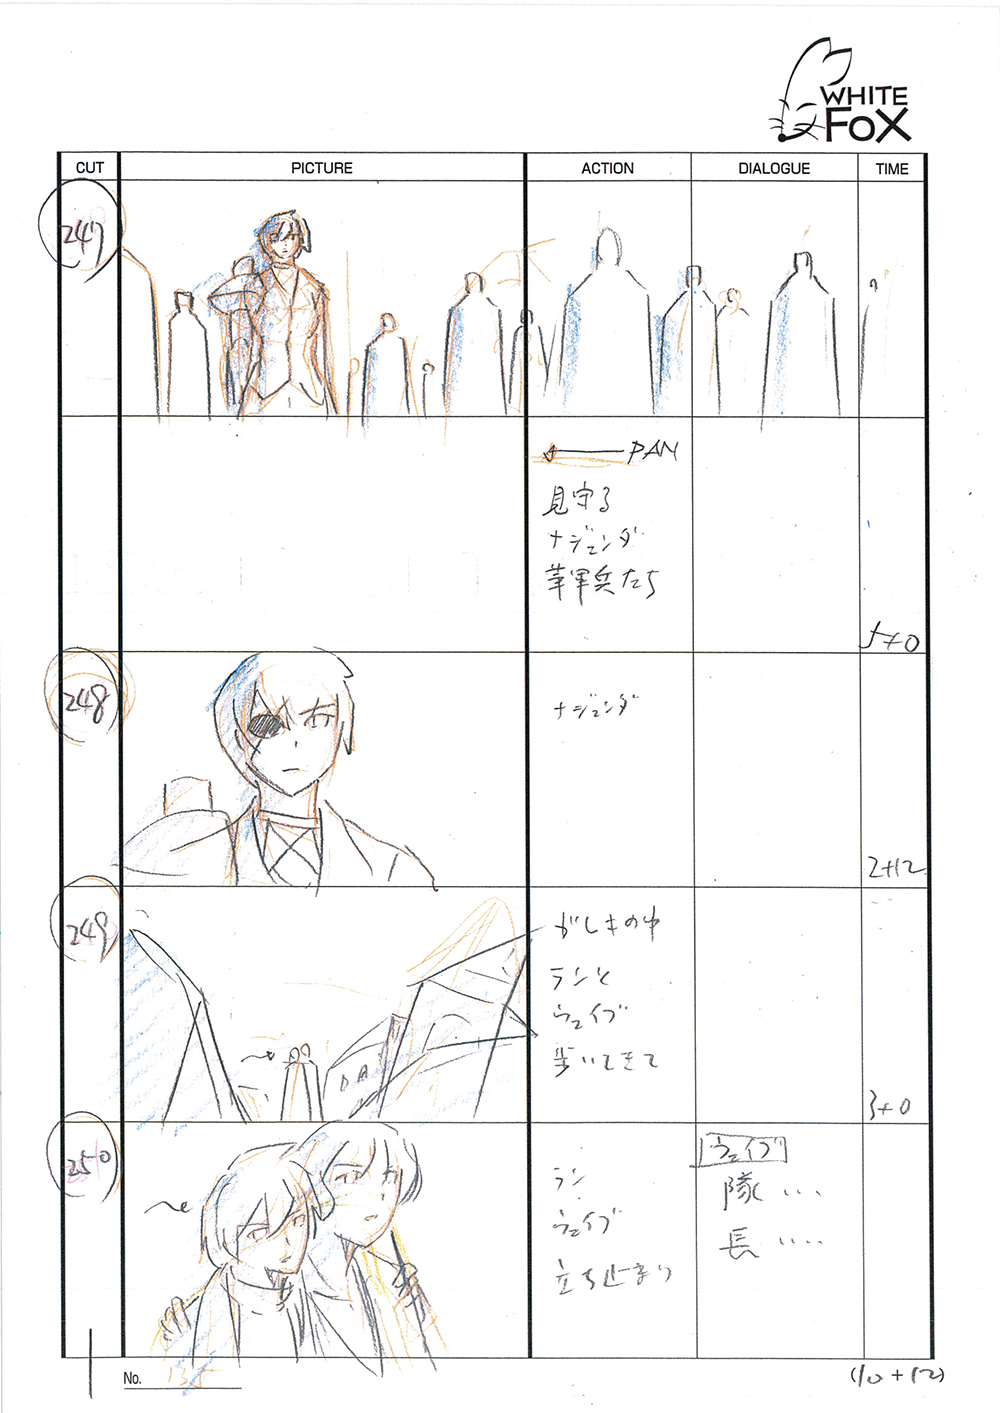 Akame ga Kill Episode 24 Storyboard Leak 140